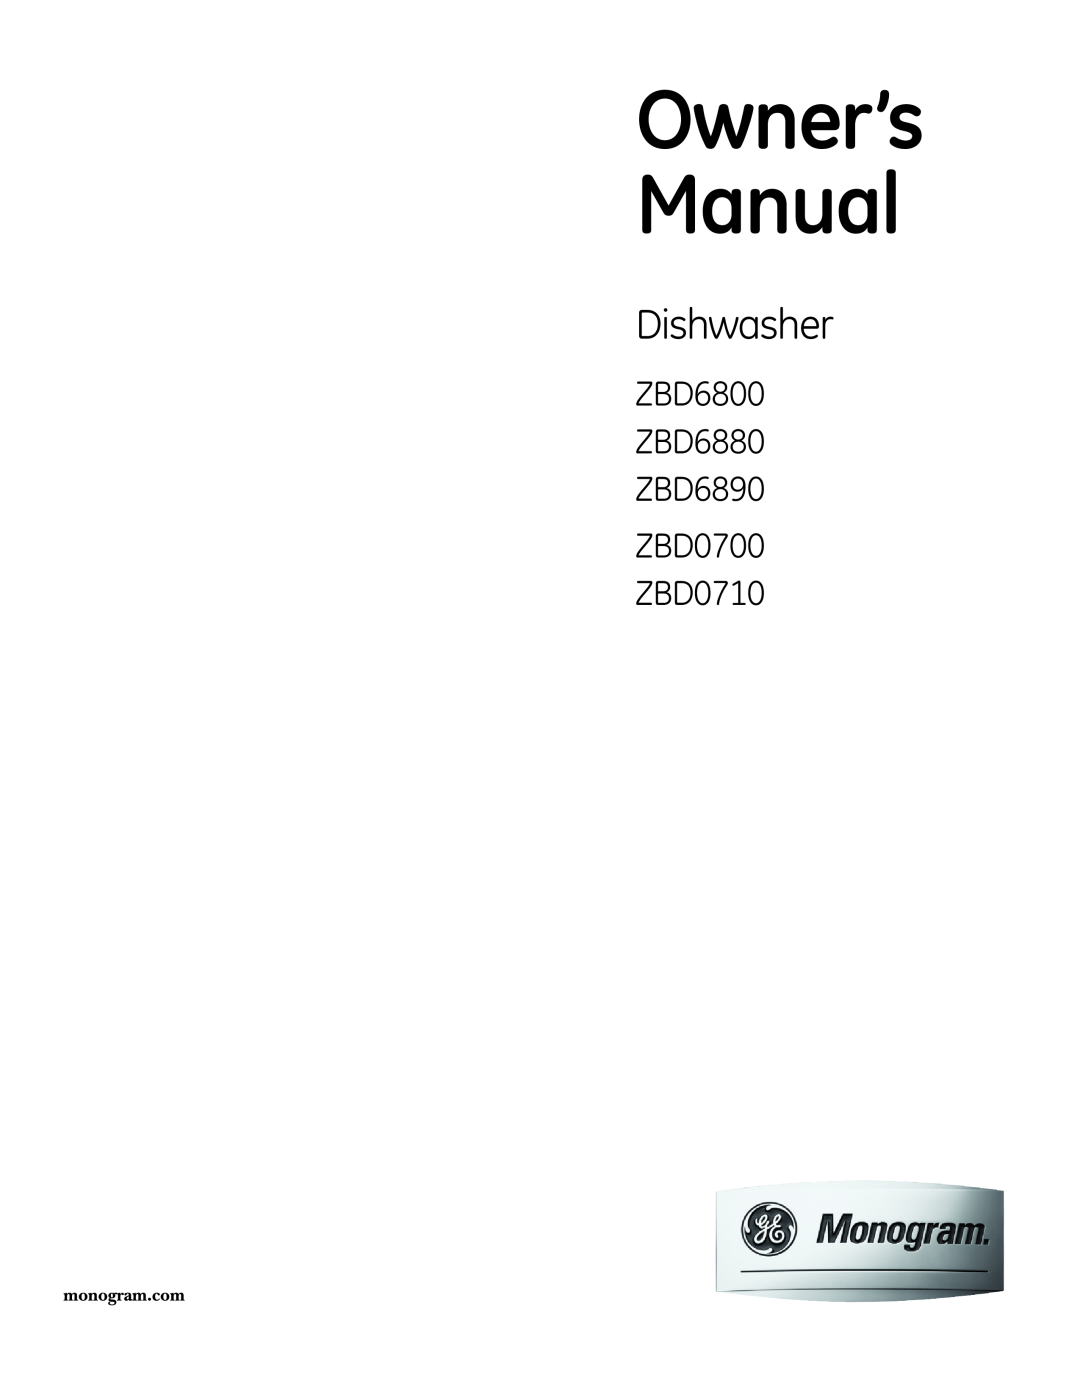 GE Monogram owner manual Dishwasher, ZBD6800 ZBD6880 ZBD6890 ZBD0700 ZBD0710 